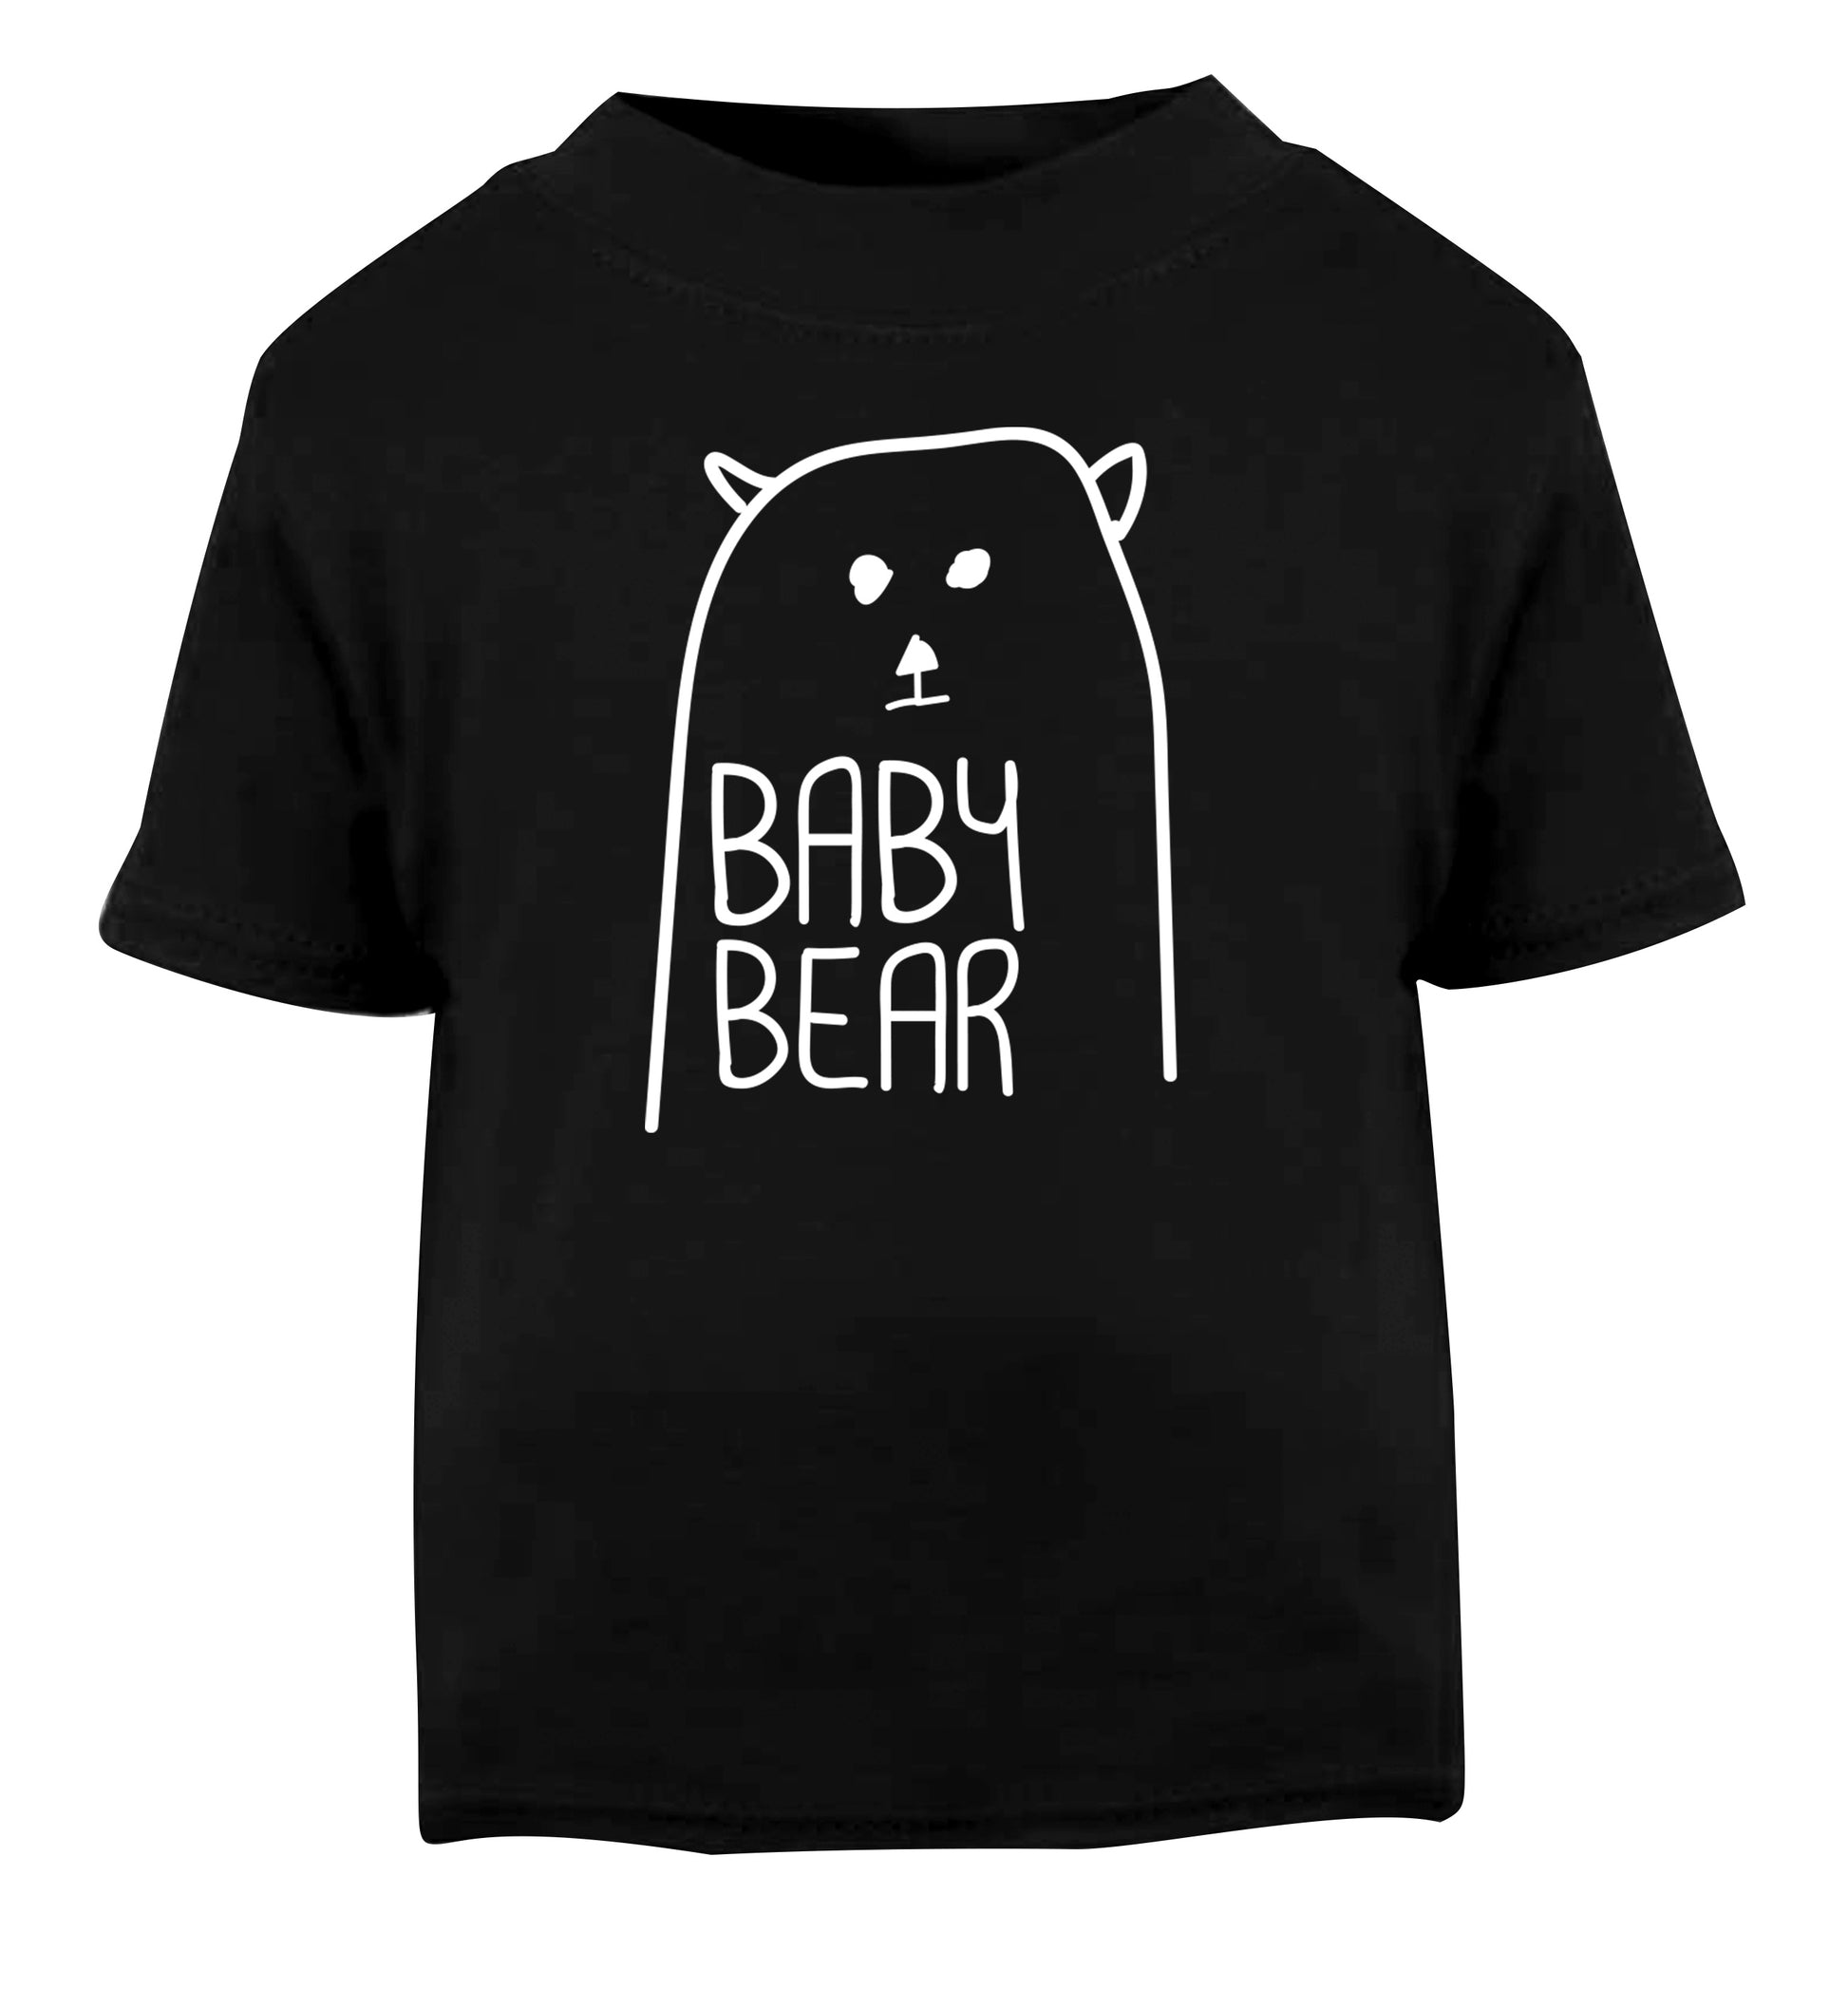 Baby bear Black Baby Toddler Tshirt 2 years